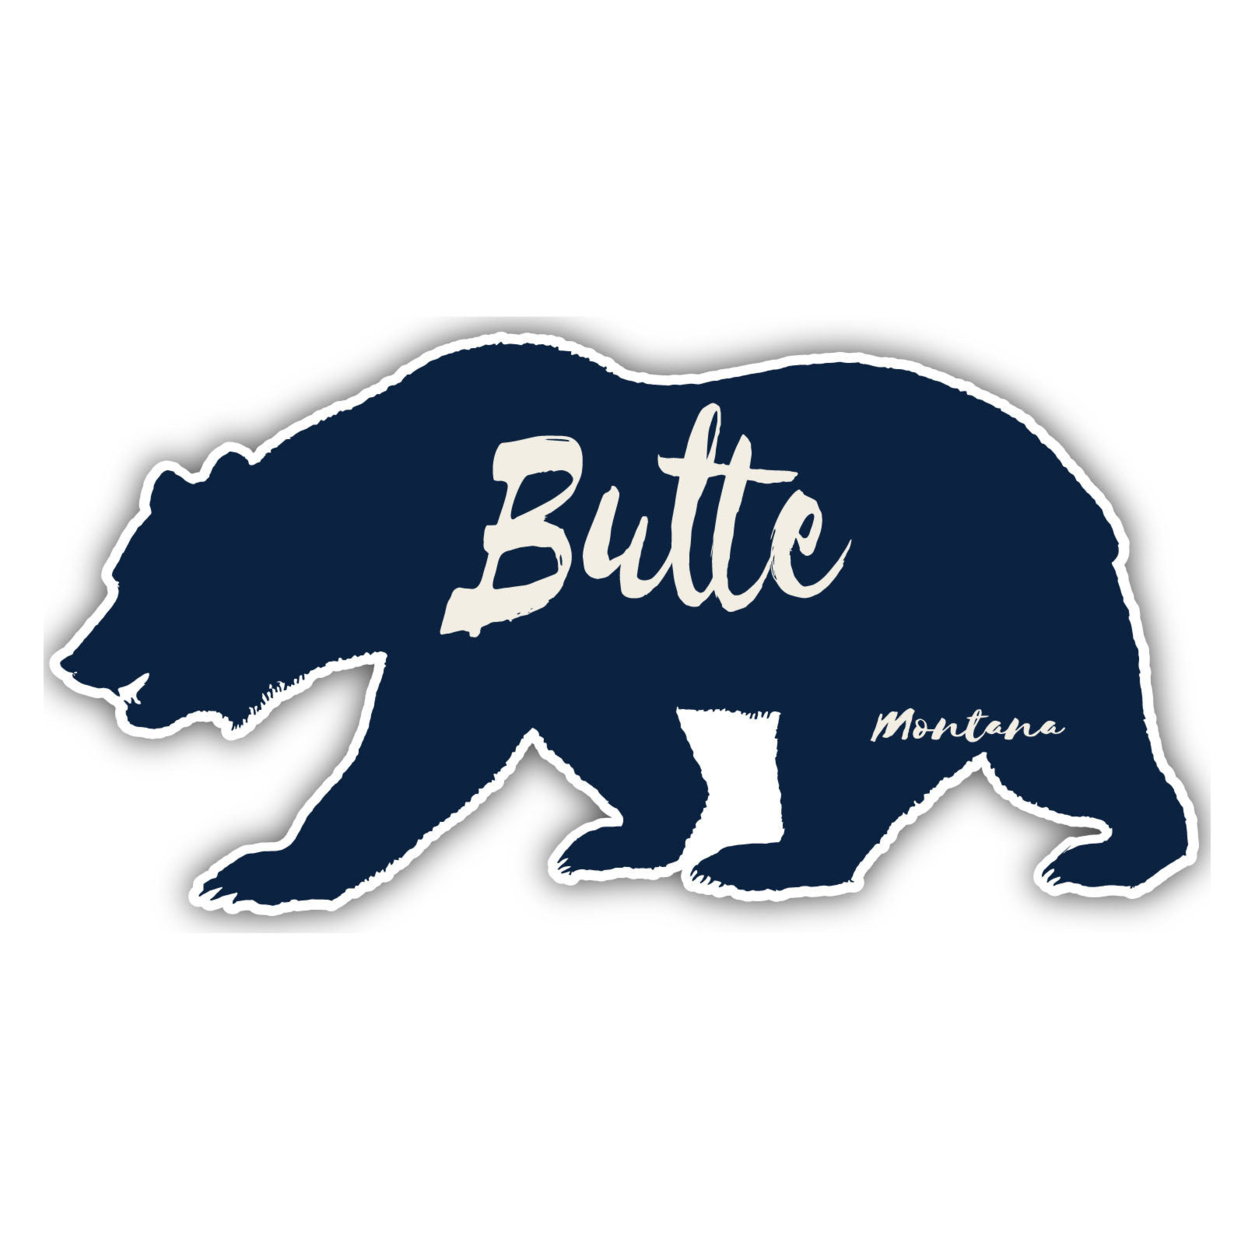 Butte Montana Souvenir Decorative Stickers (Choose Theme And Size) - Single Unit, 8-Inch, Bear